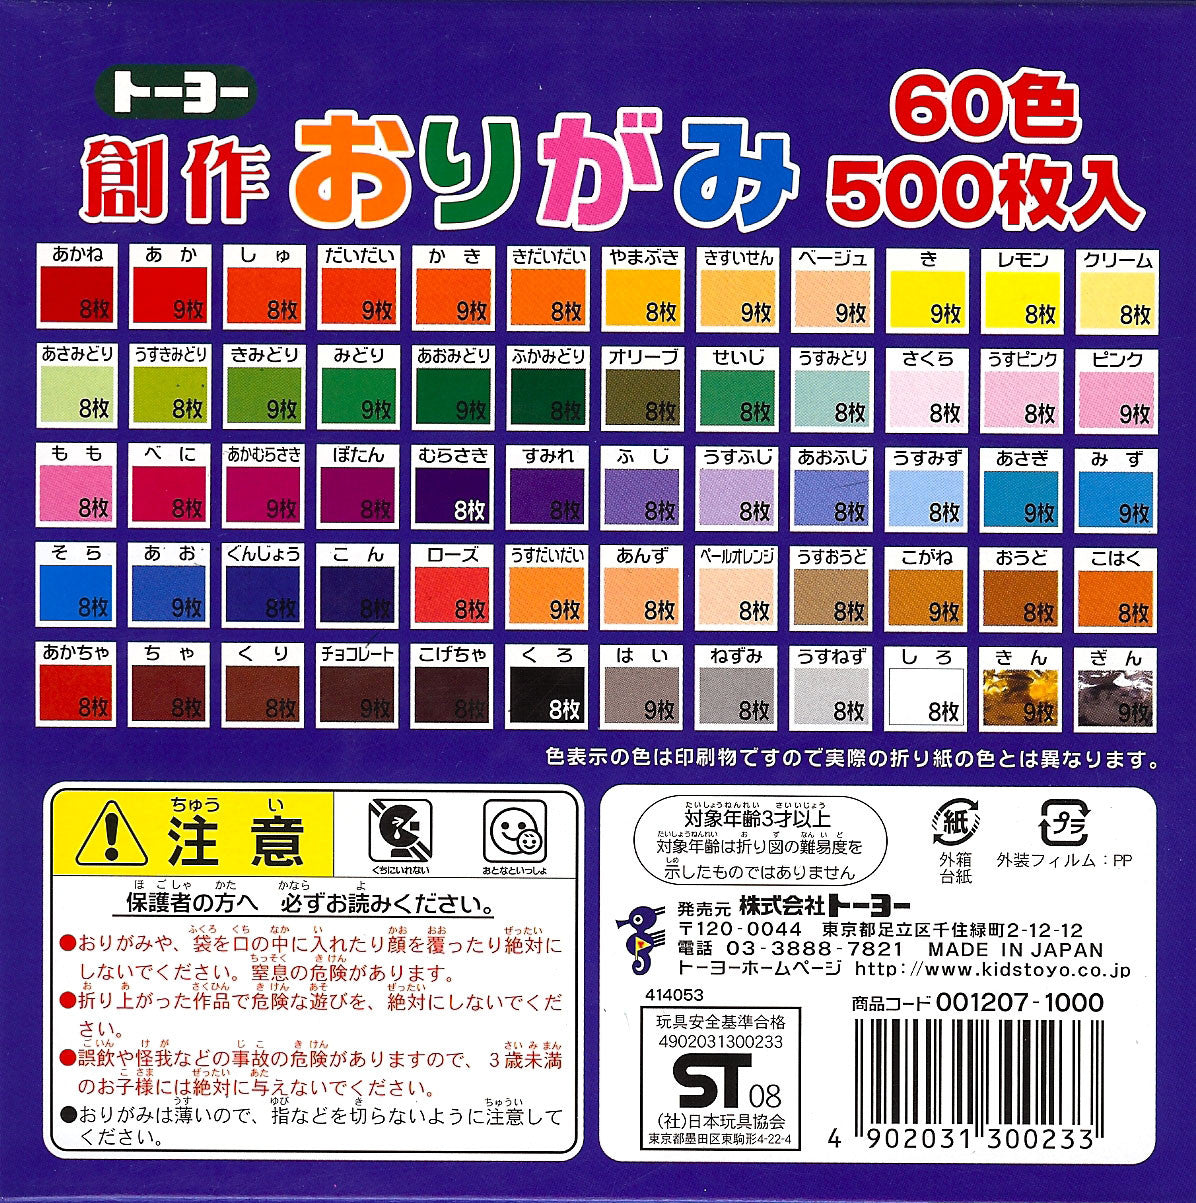 60 Color Origami Paper - Colors